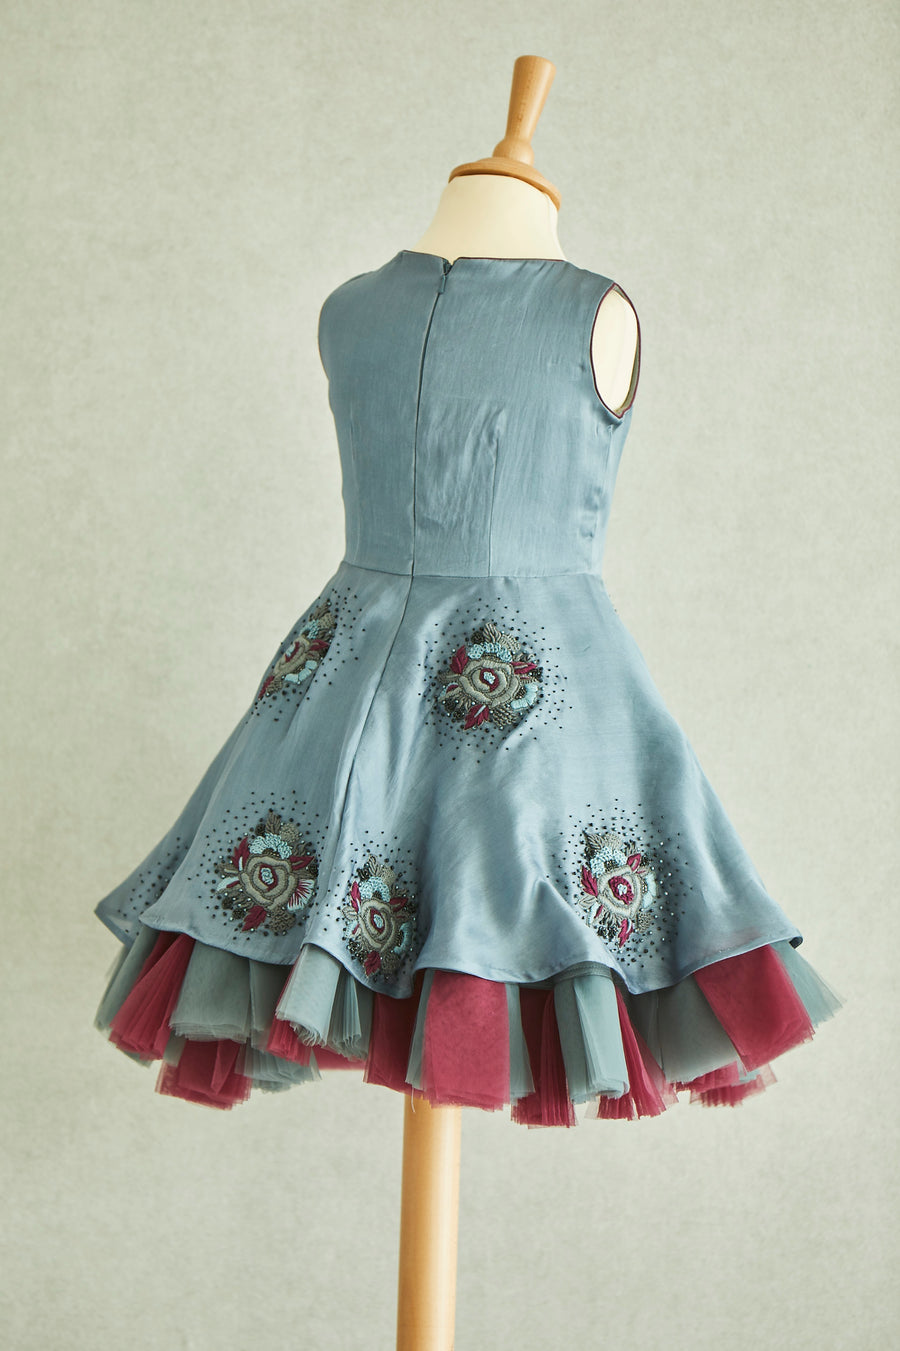 Hand Embroidered Roses Motifs Silk Organza Dress